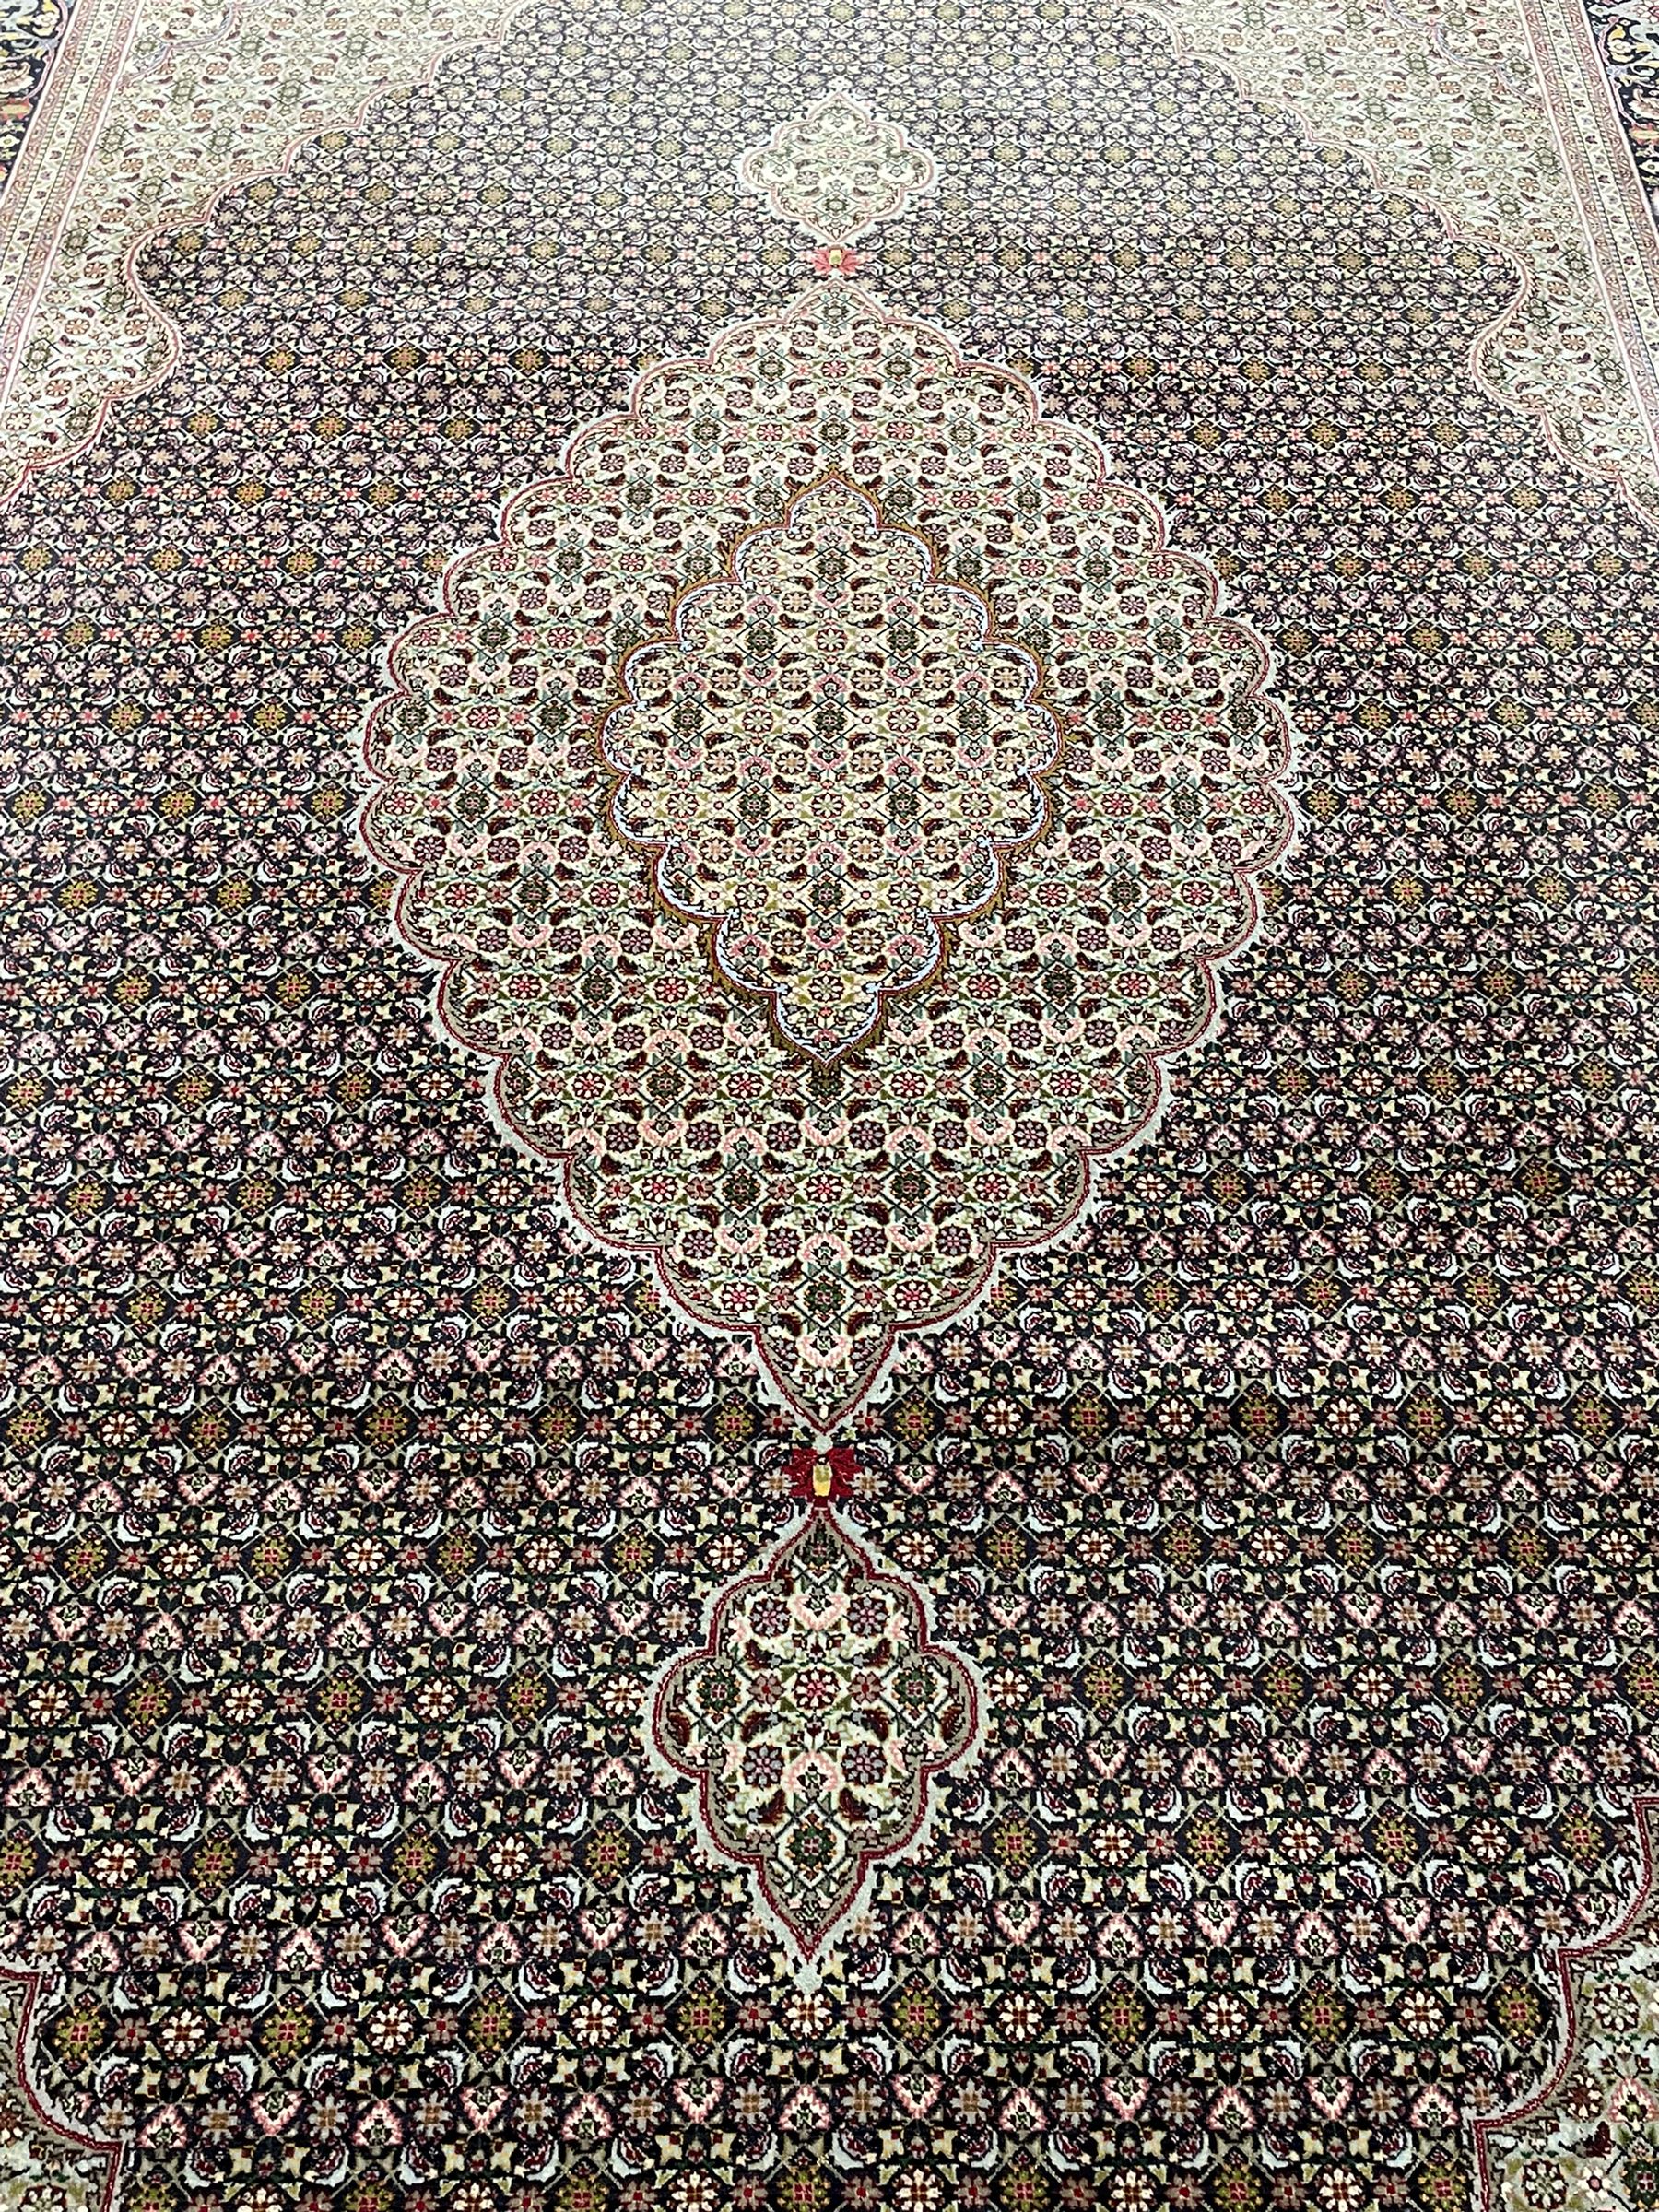 Fine Persian Tabriz rug - Image 2 of 8